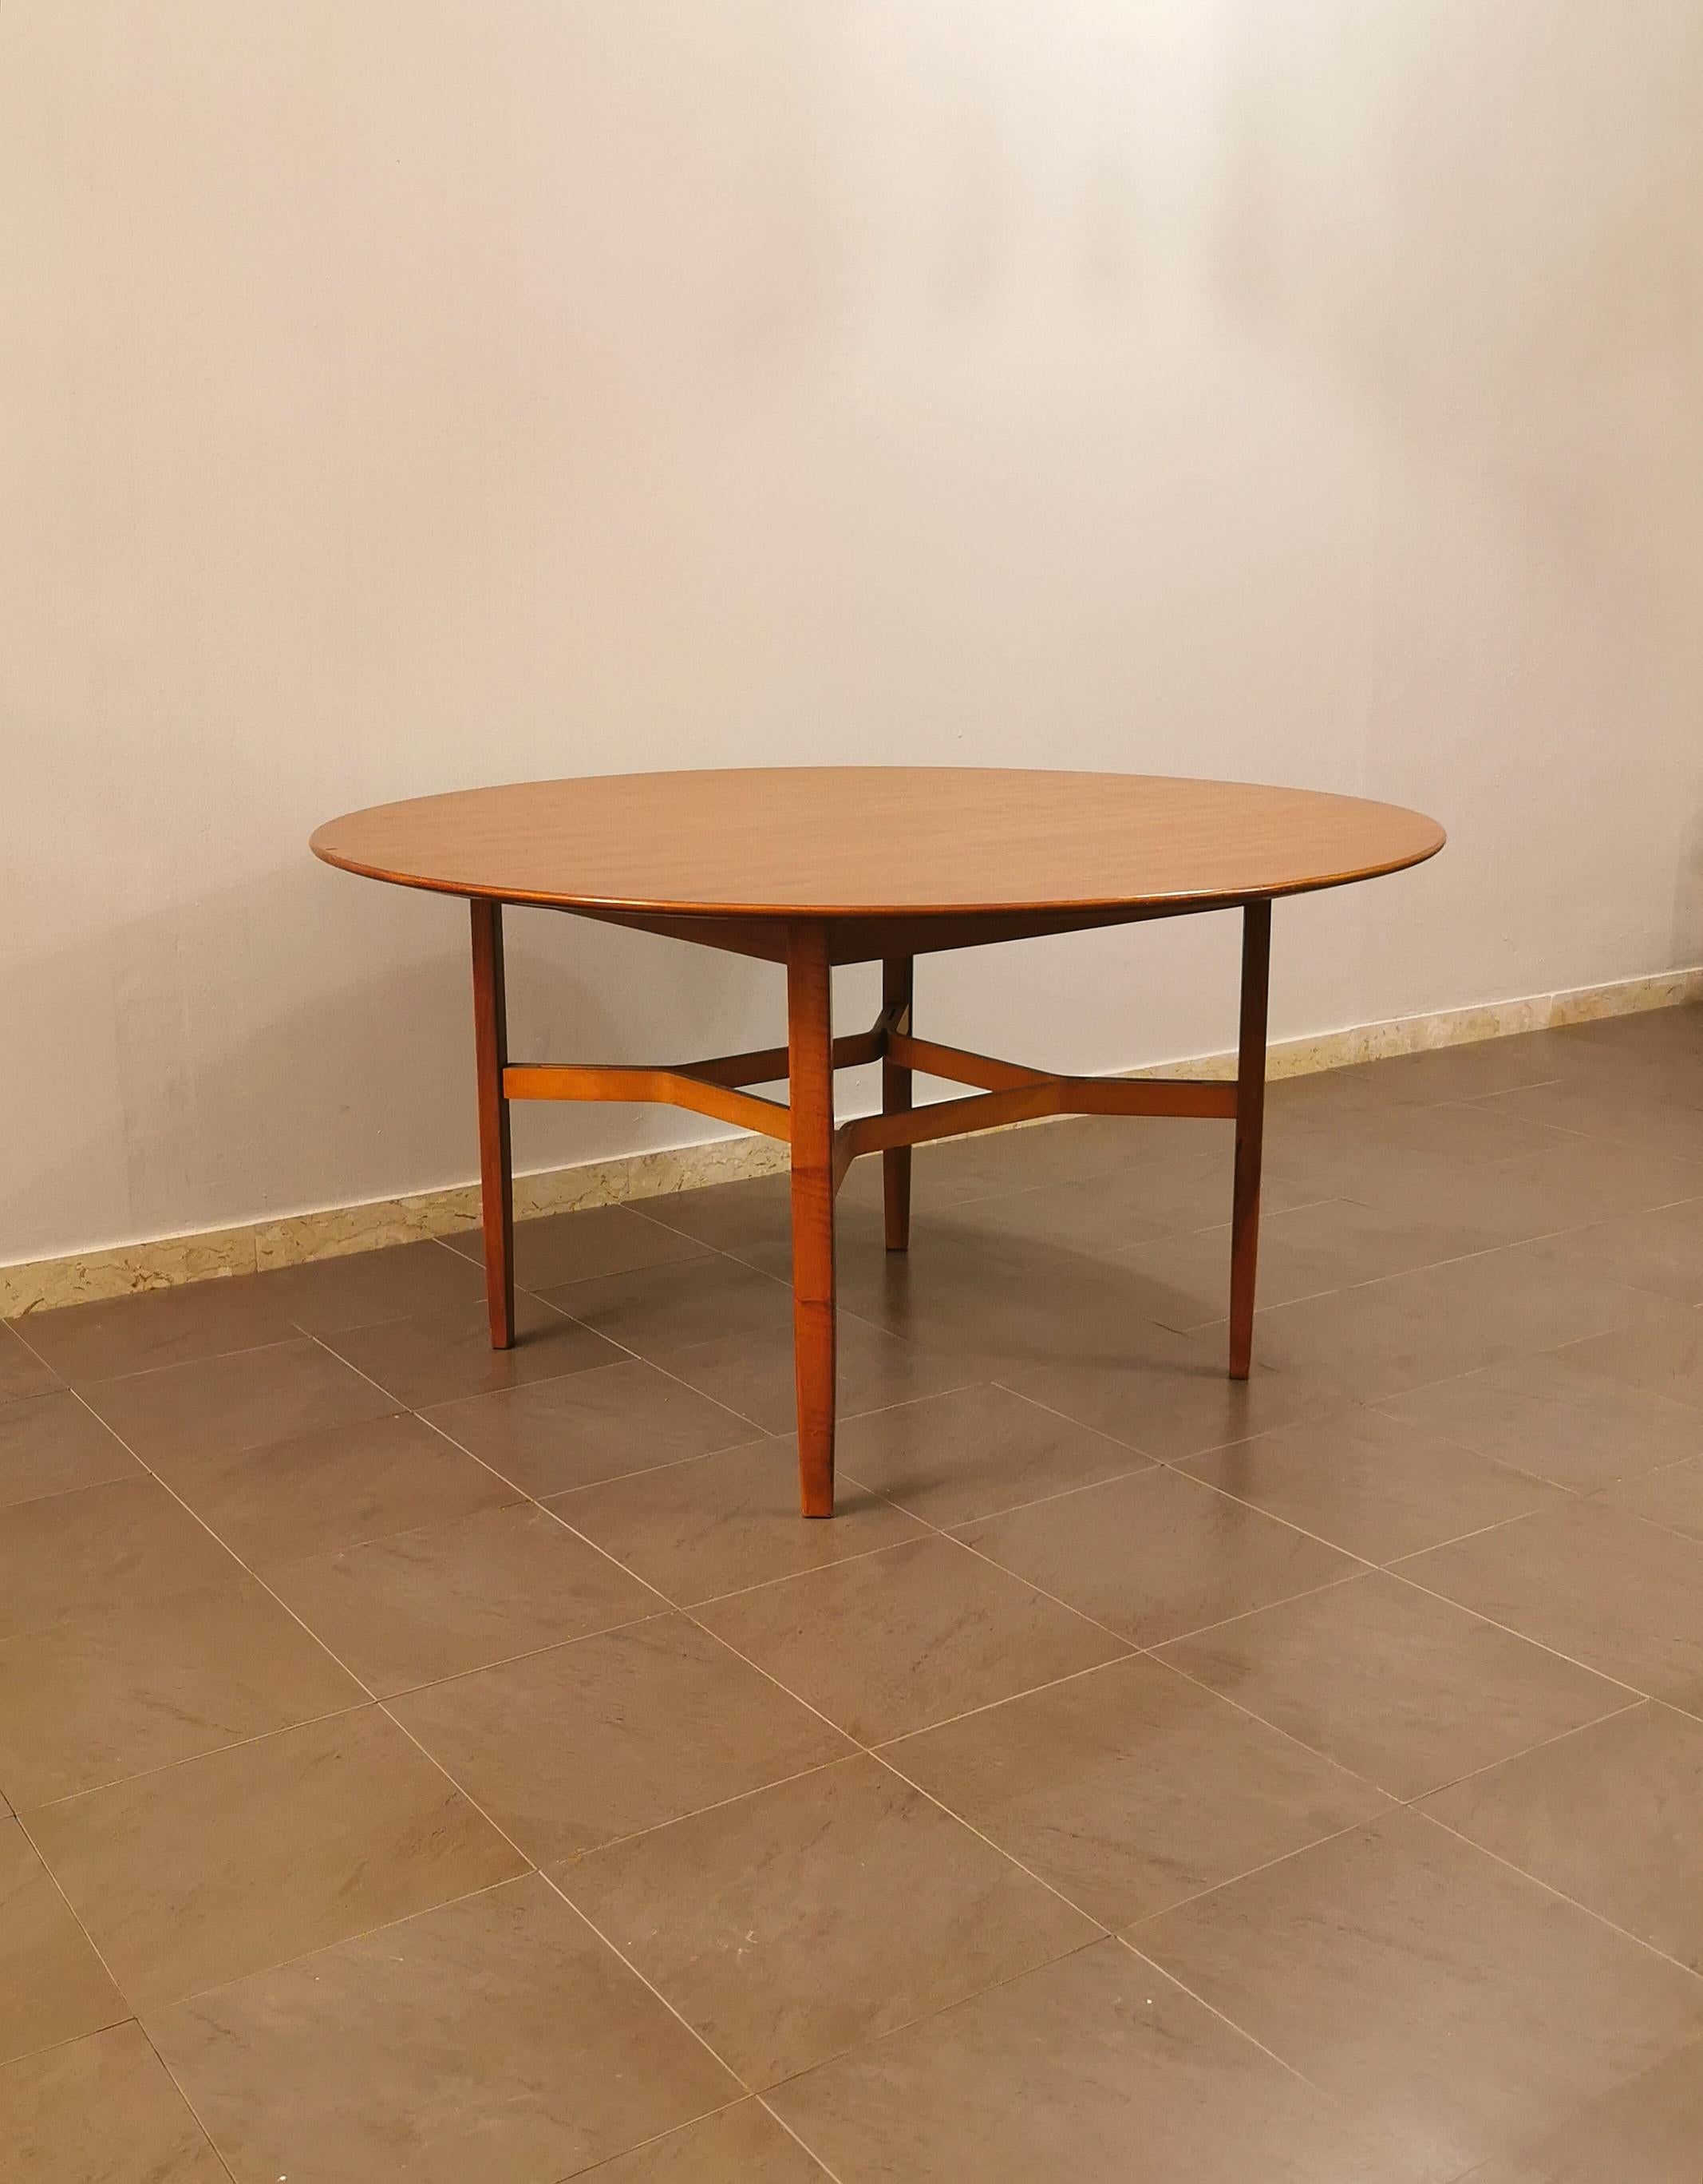 20th Century Dining Room Table Wood Round Mid Century Italian Design 1960s